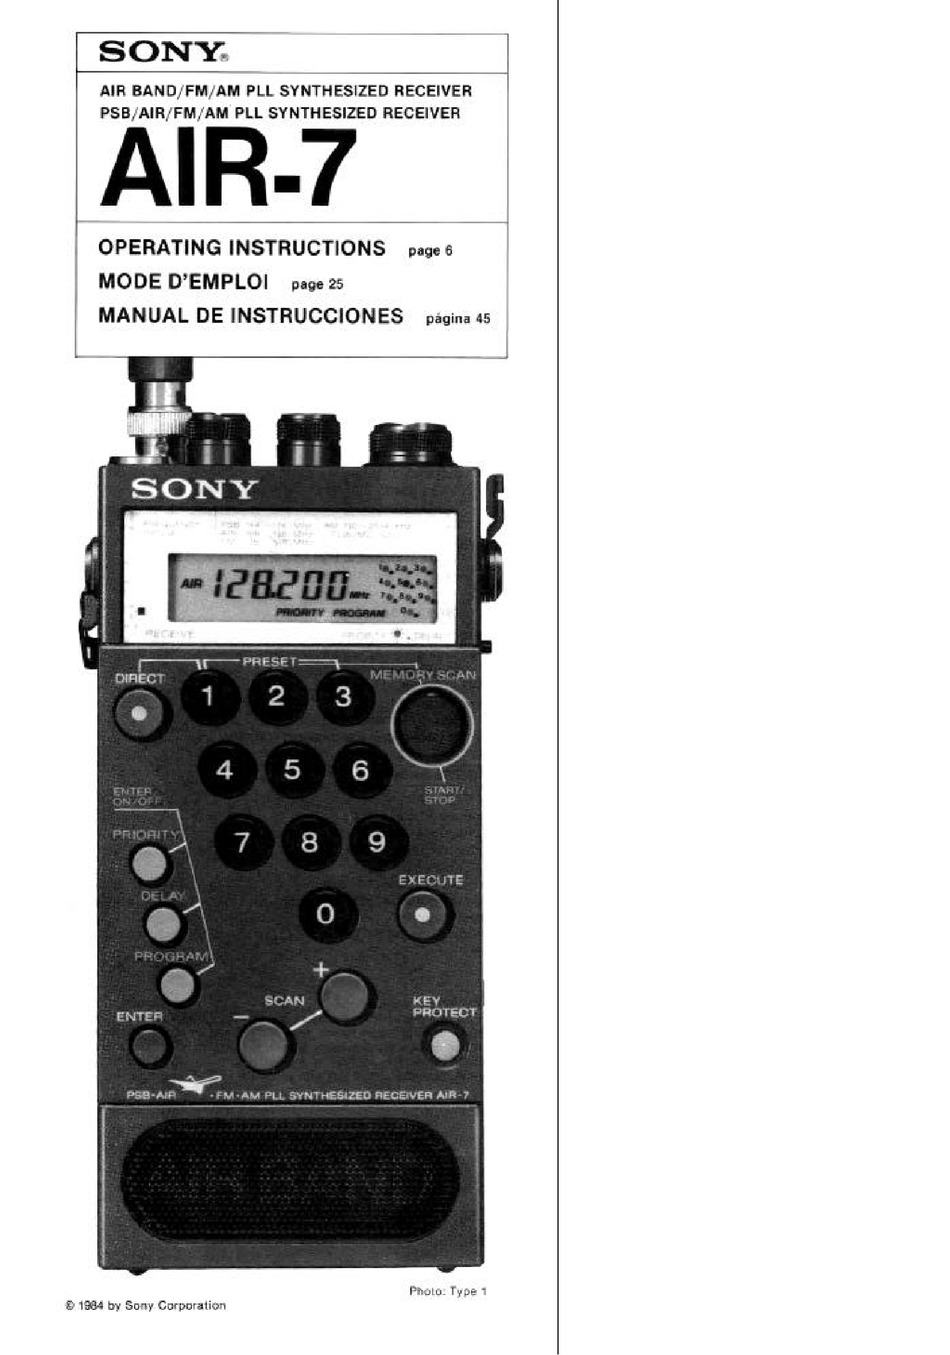 SONY AIR-7 OPERATING INSTRUCTIONS MANUAL Pdf Download | ManualsLib